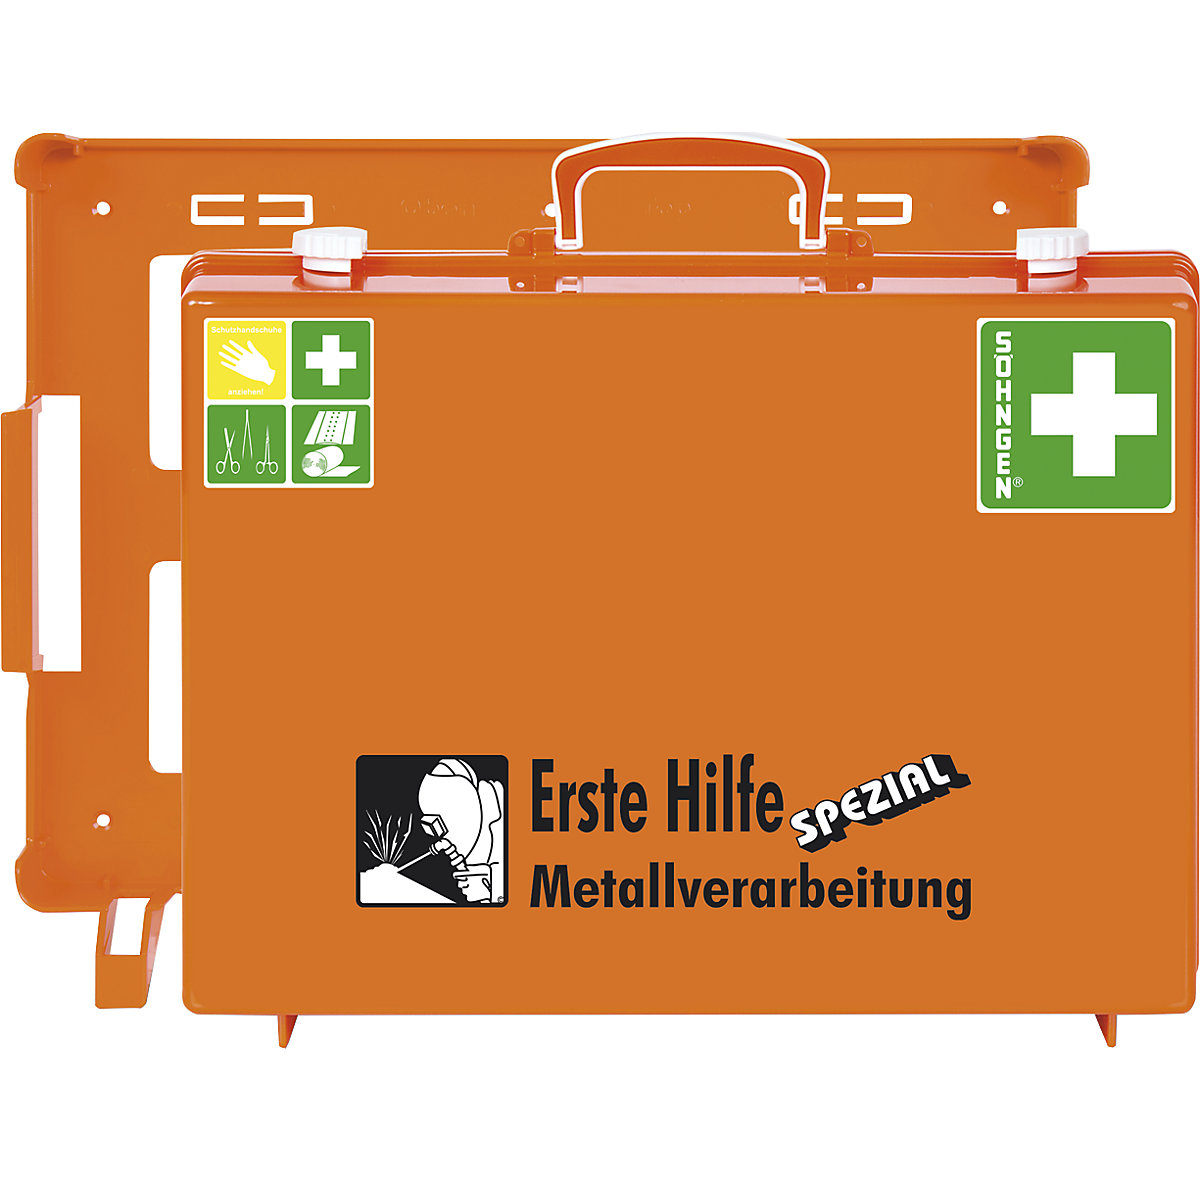 EHBO-koffers SPECIAL – SÖHNGEN, afgestemd op beroepsrisico's, inhoud conform DIN 13157, metaalbewerking-5